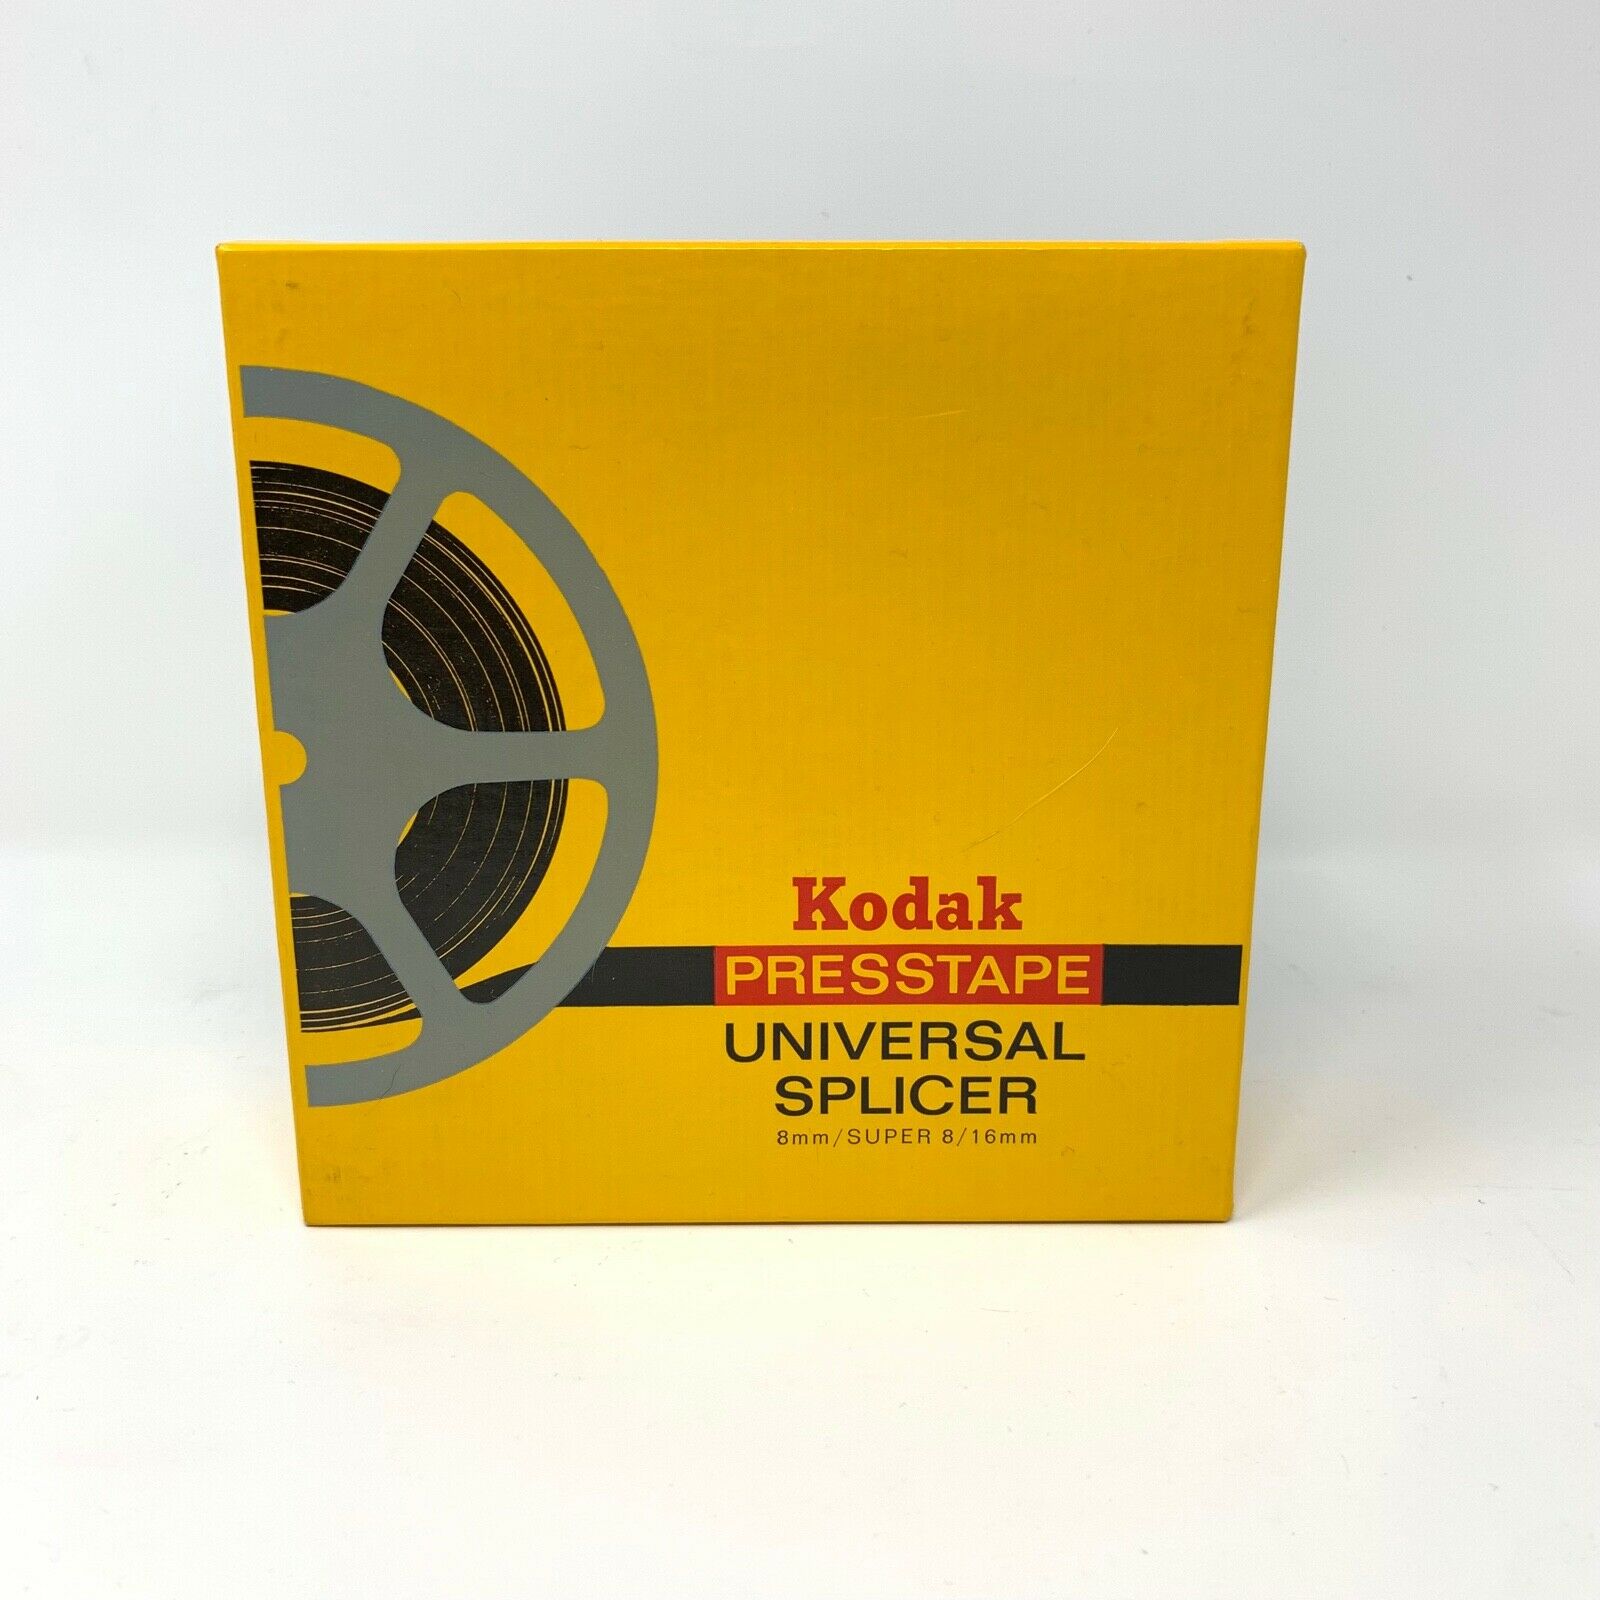 VINTAGE Kodak Presstape Universal Splicer 8mm, Super 8, 16mm with Presstapes EUC